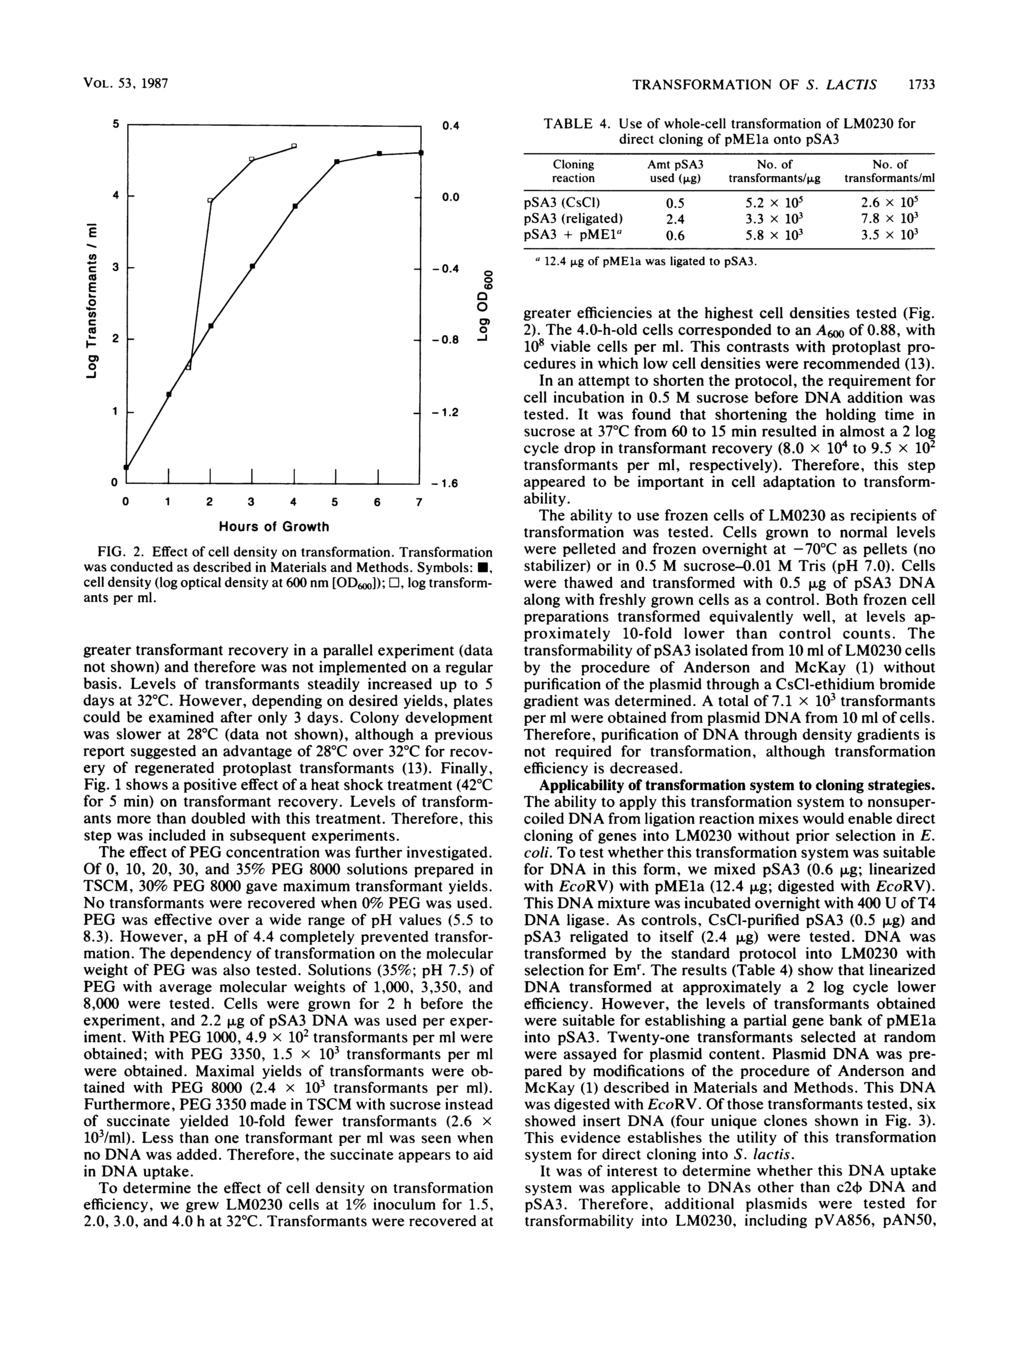 VOL. 53, 1987 E o J I- ) ) -J 5 4 3 2 1 2 3 4 5 6 7 Hours of Growth.4. -.4 a -.8 -I FIG. 2. Effect of cell density on transformation.